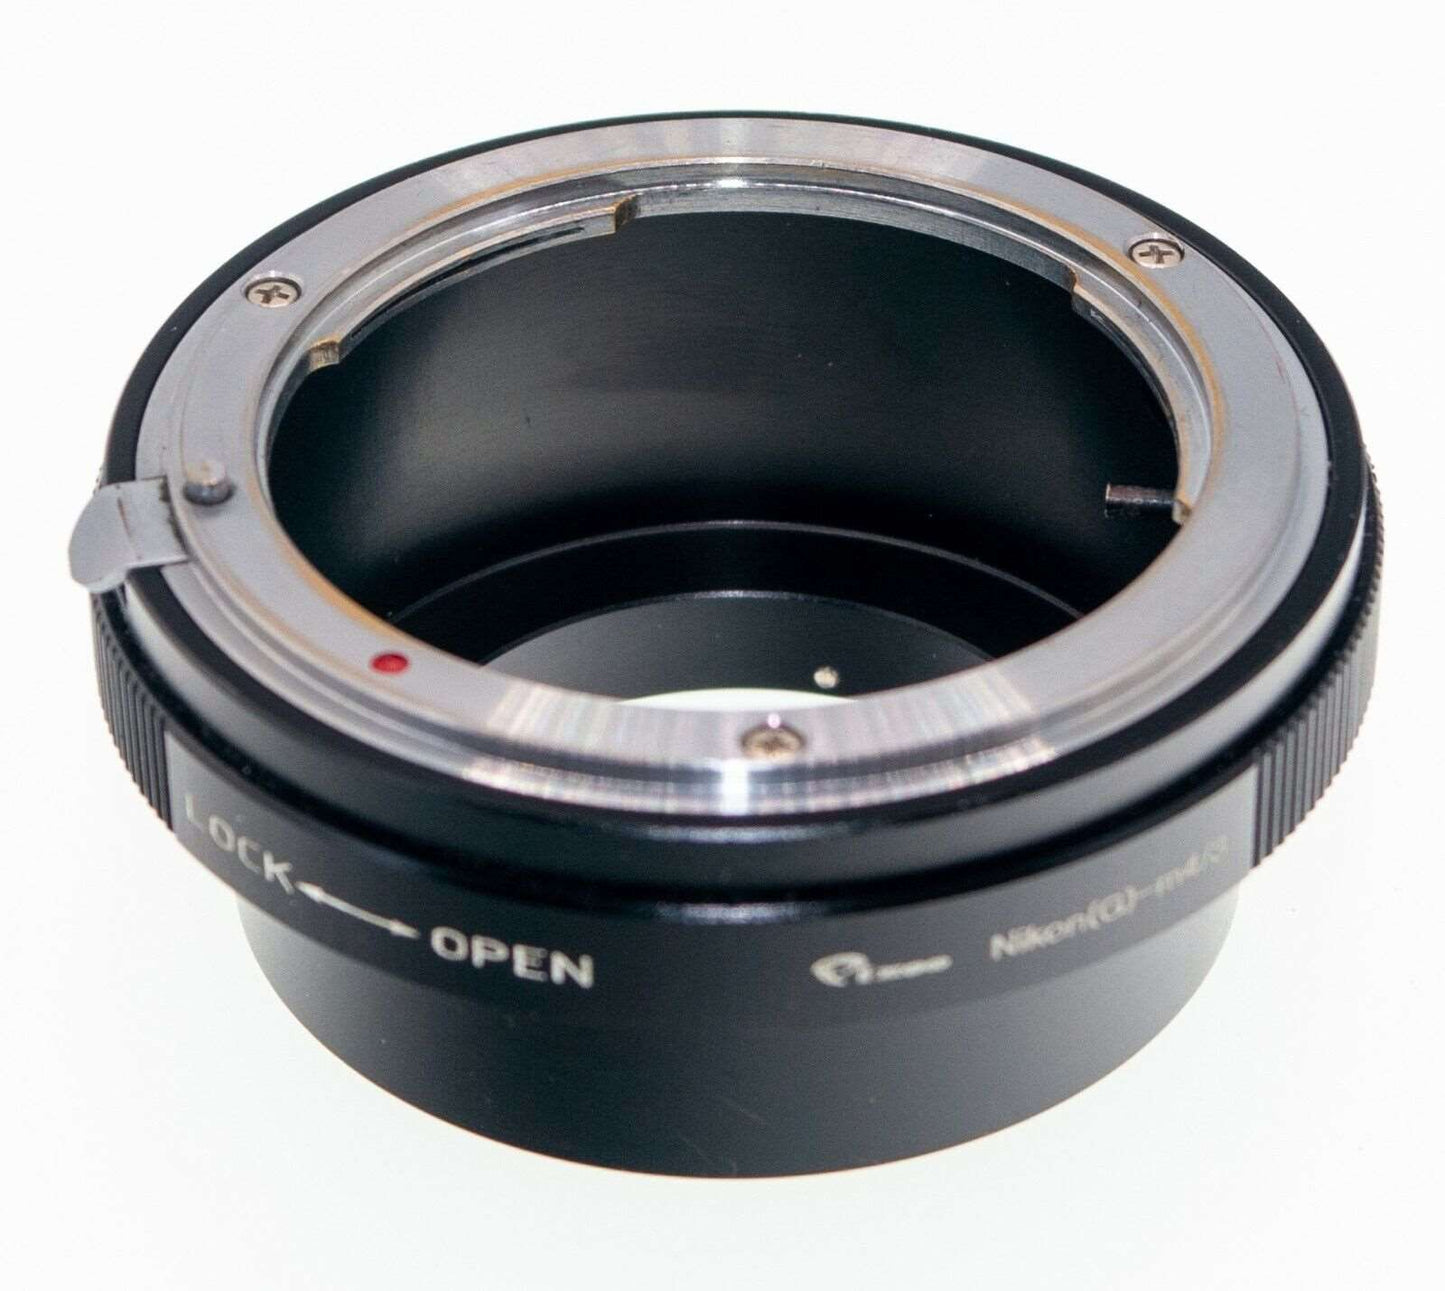 Camera Lens 35mm & Digital  Adaptor from Pixco - Nikon (G) to m4/3 Adapter